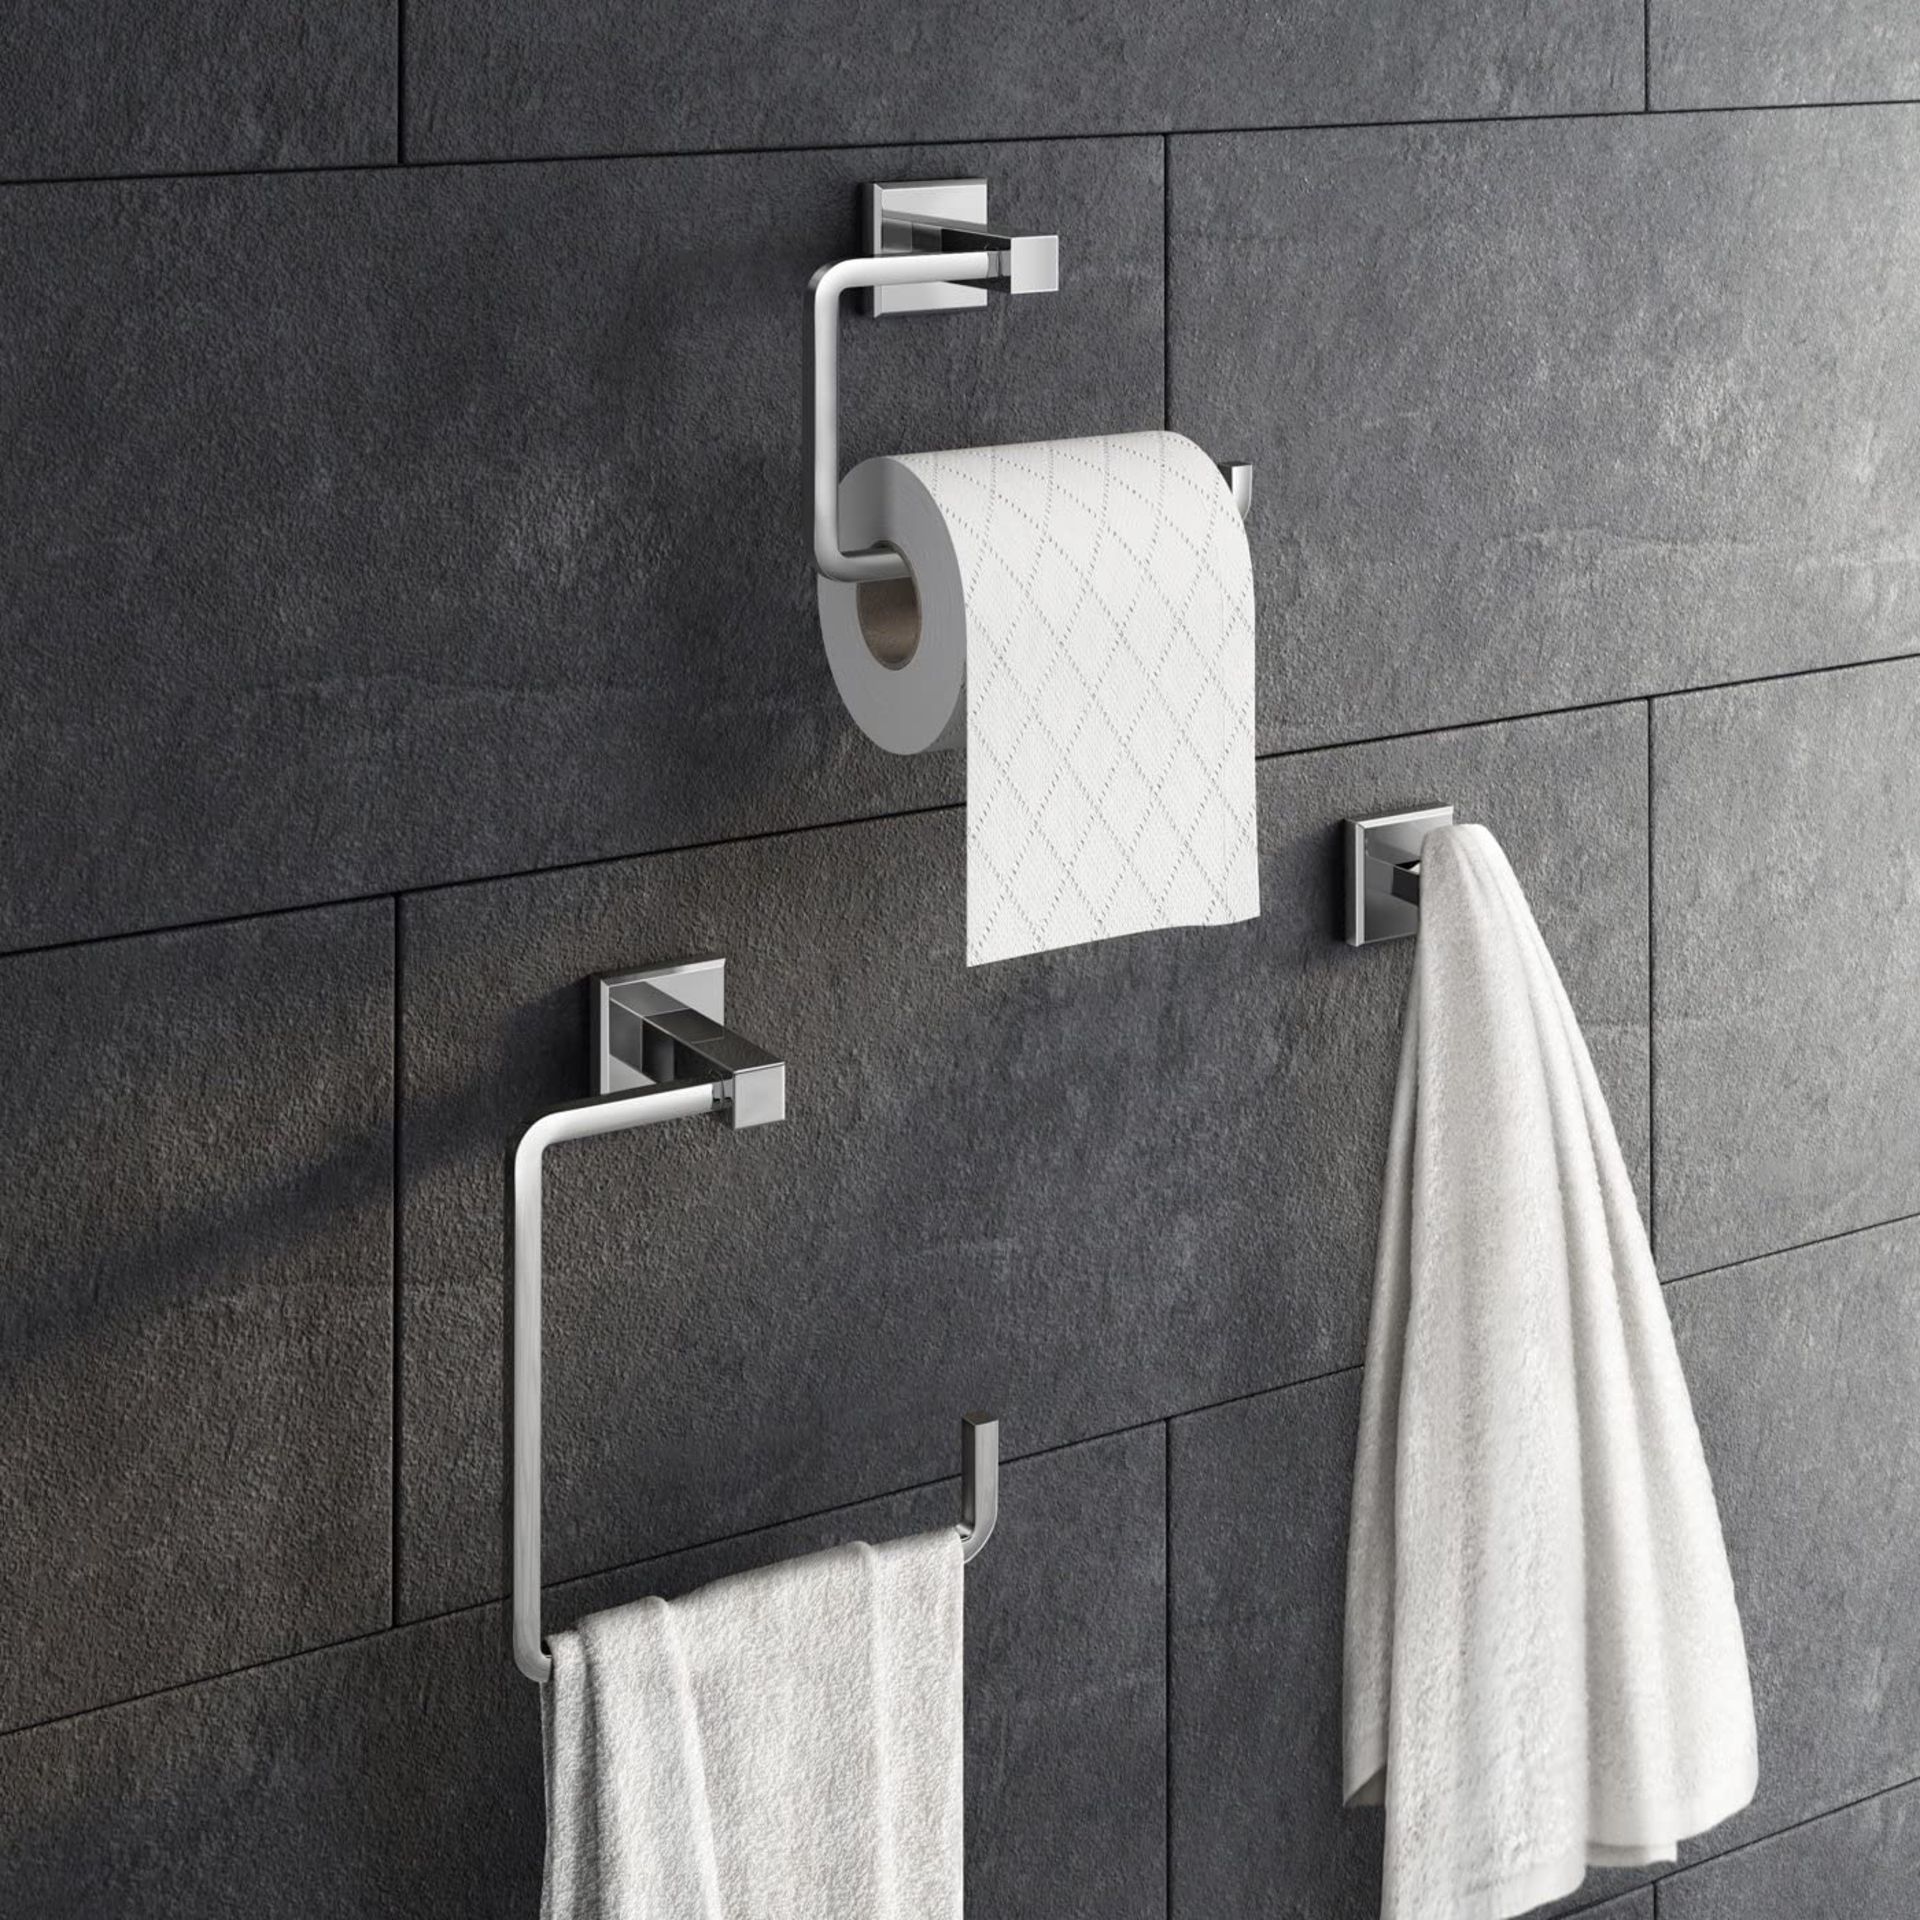 (MG1005) 3 Piece Bathroom Accessory Set Towel Ring Toilet Roll Holder + Robe Hook Kit .